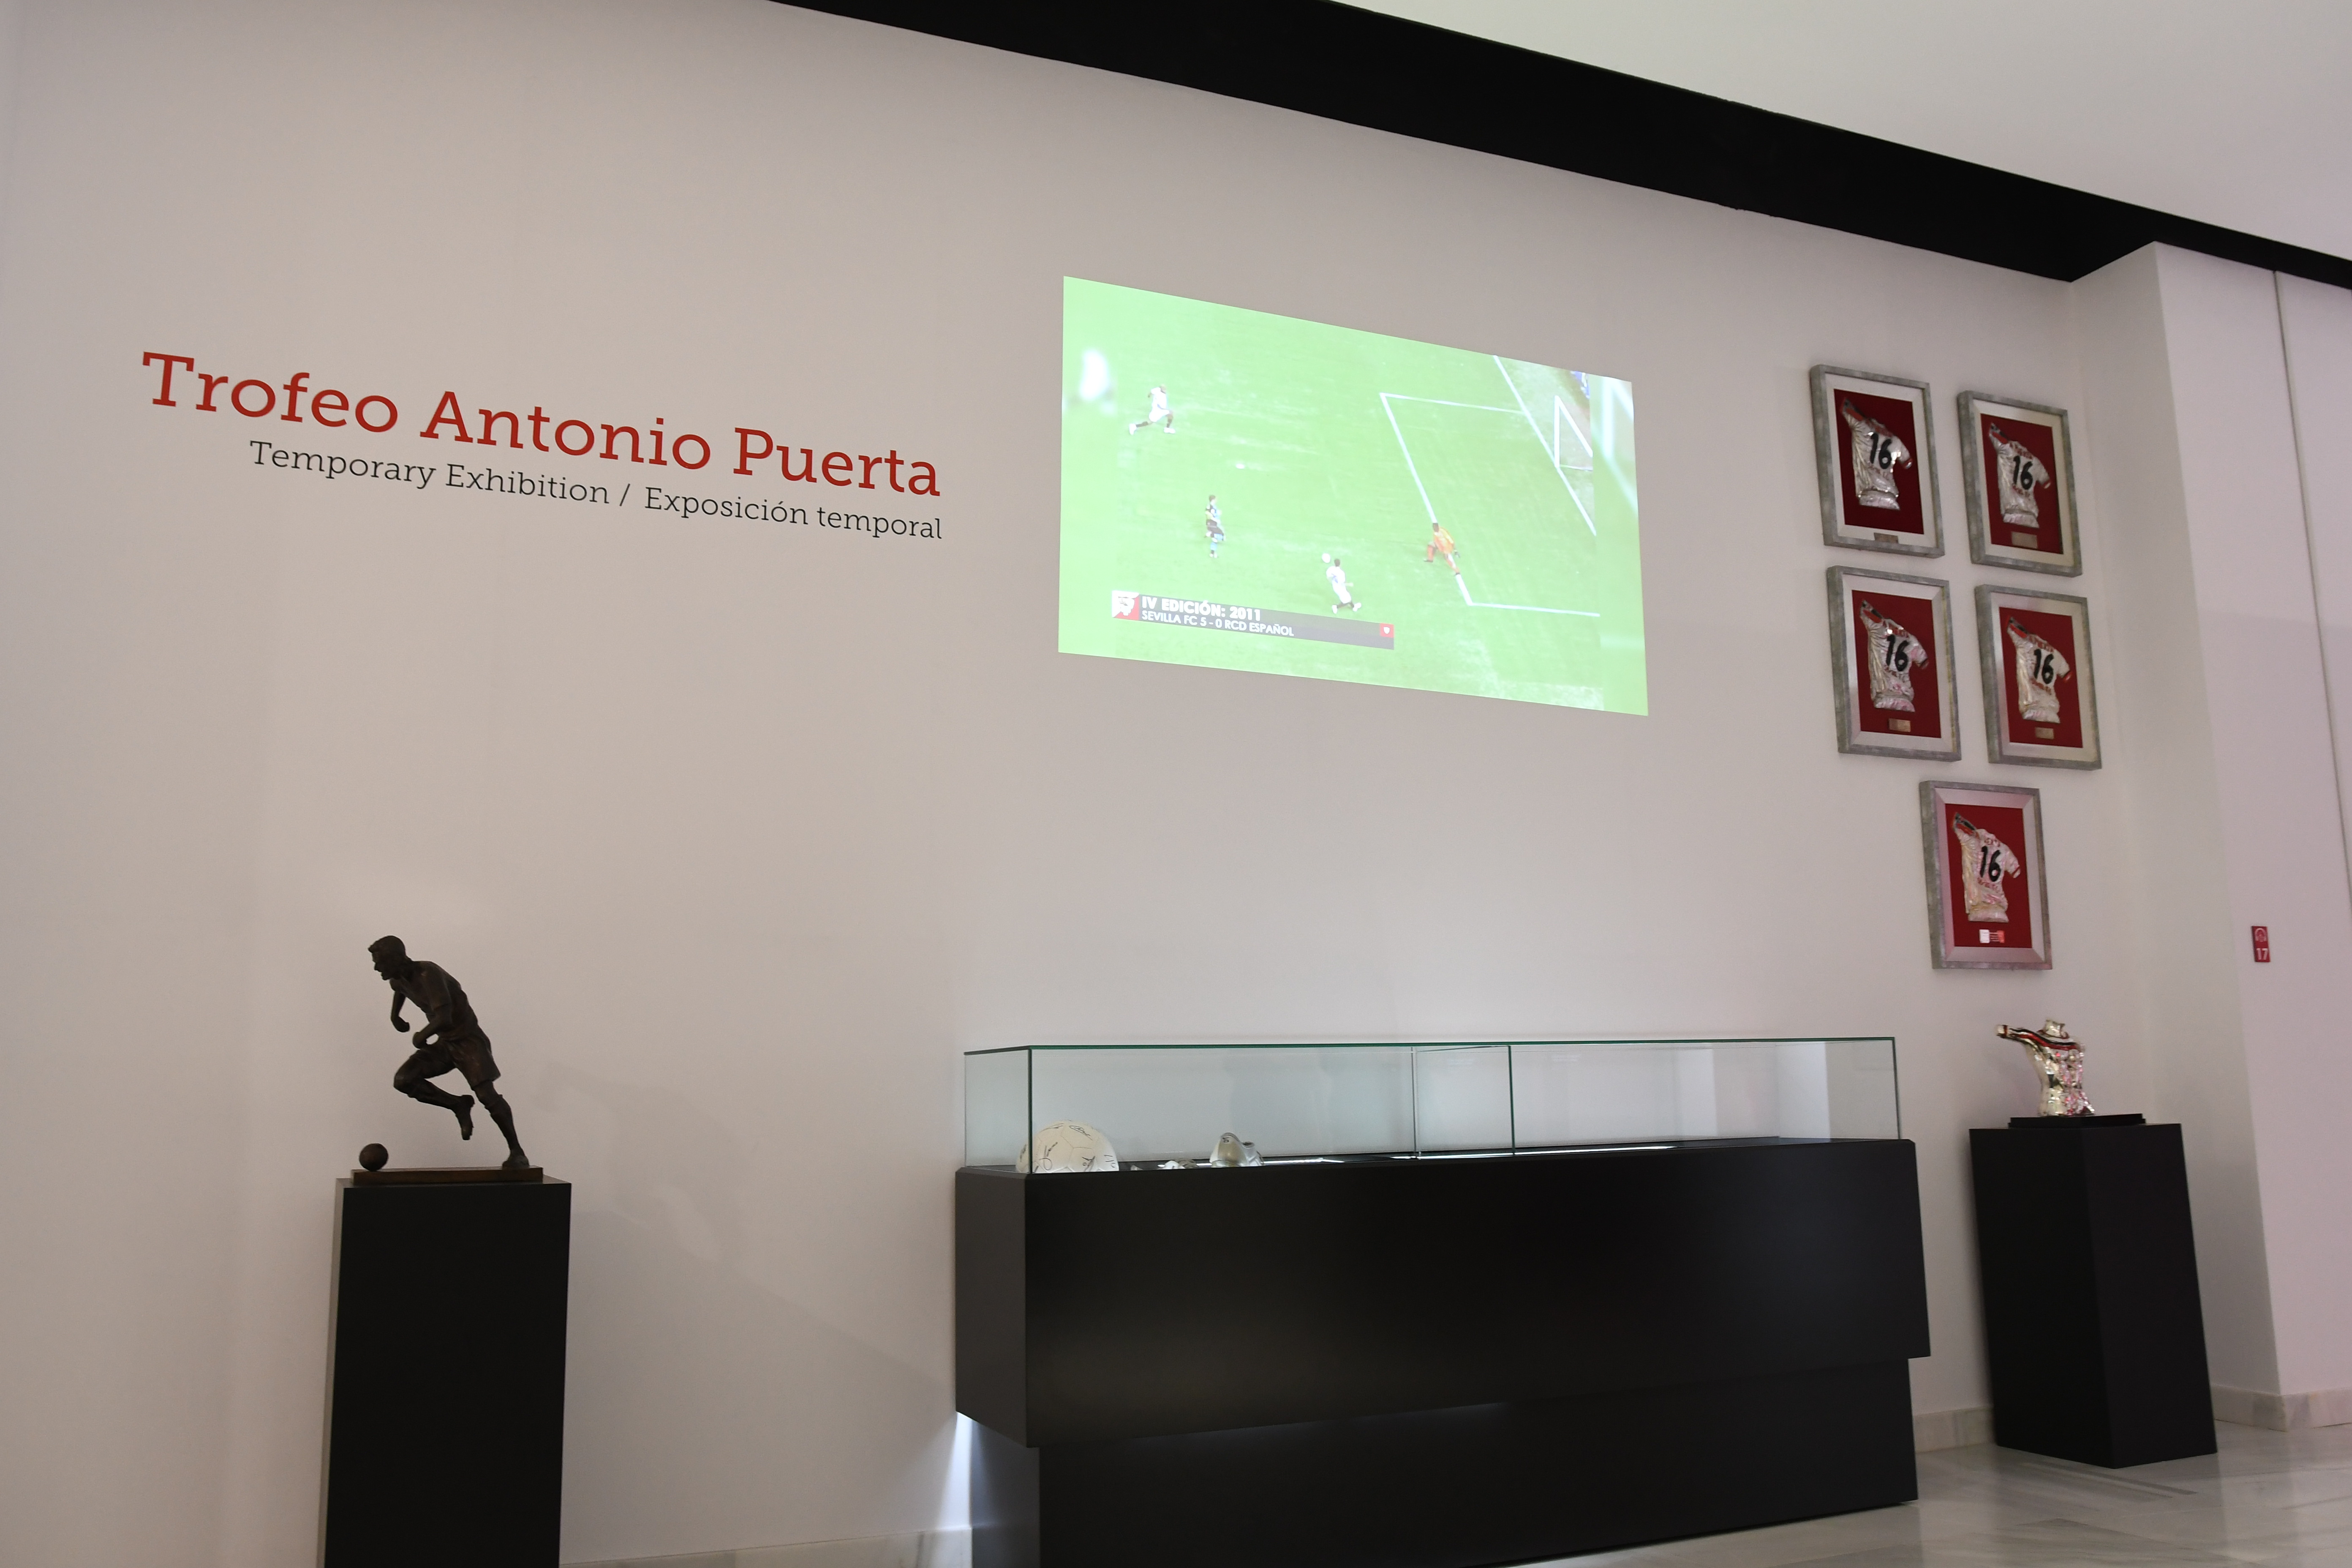 Exhibition on the Antonio Puerta Trophy